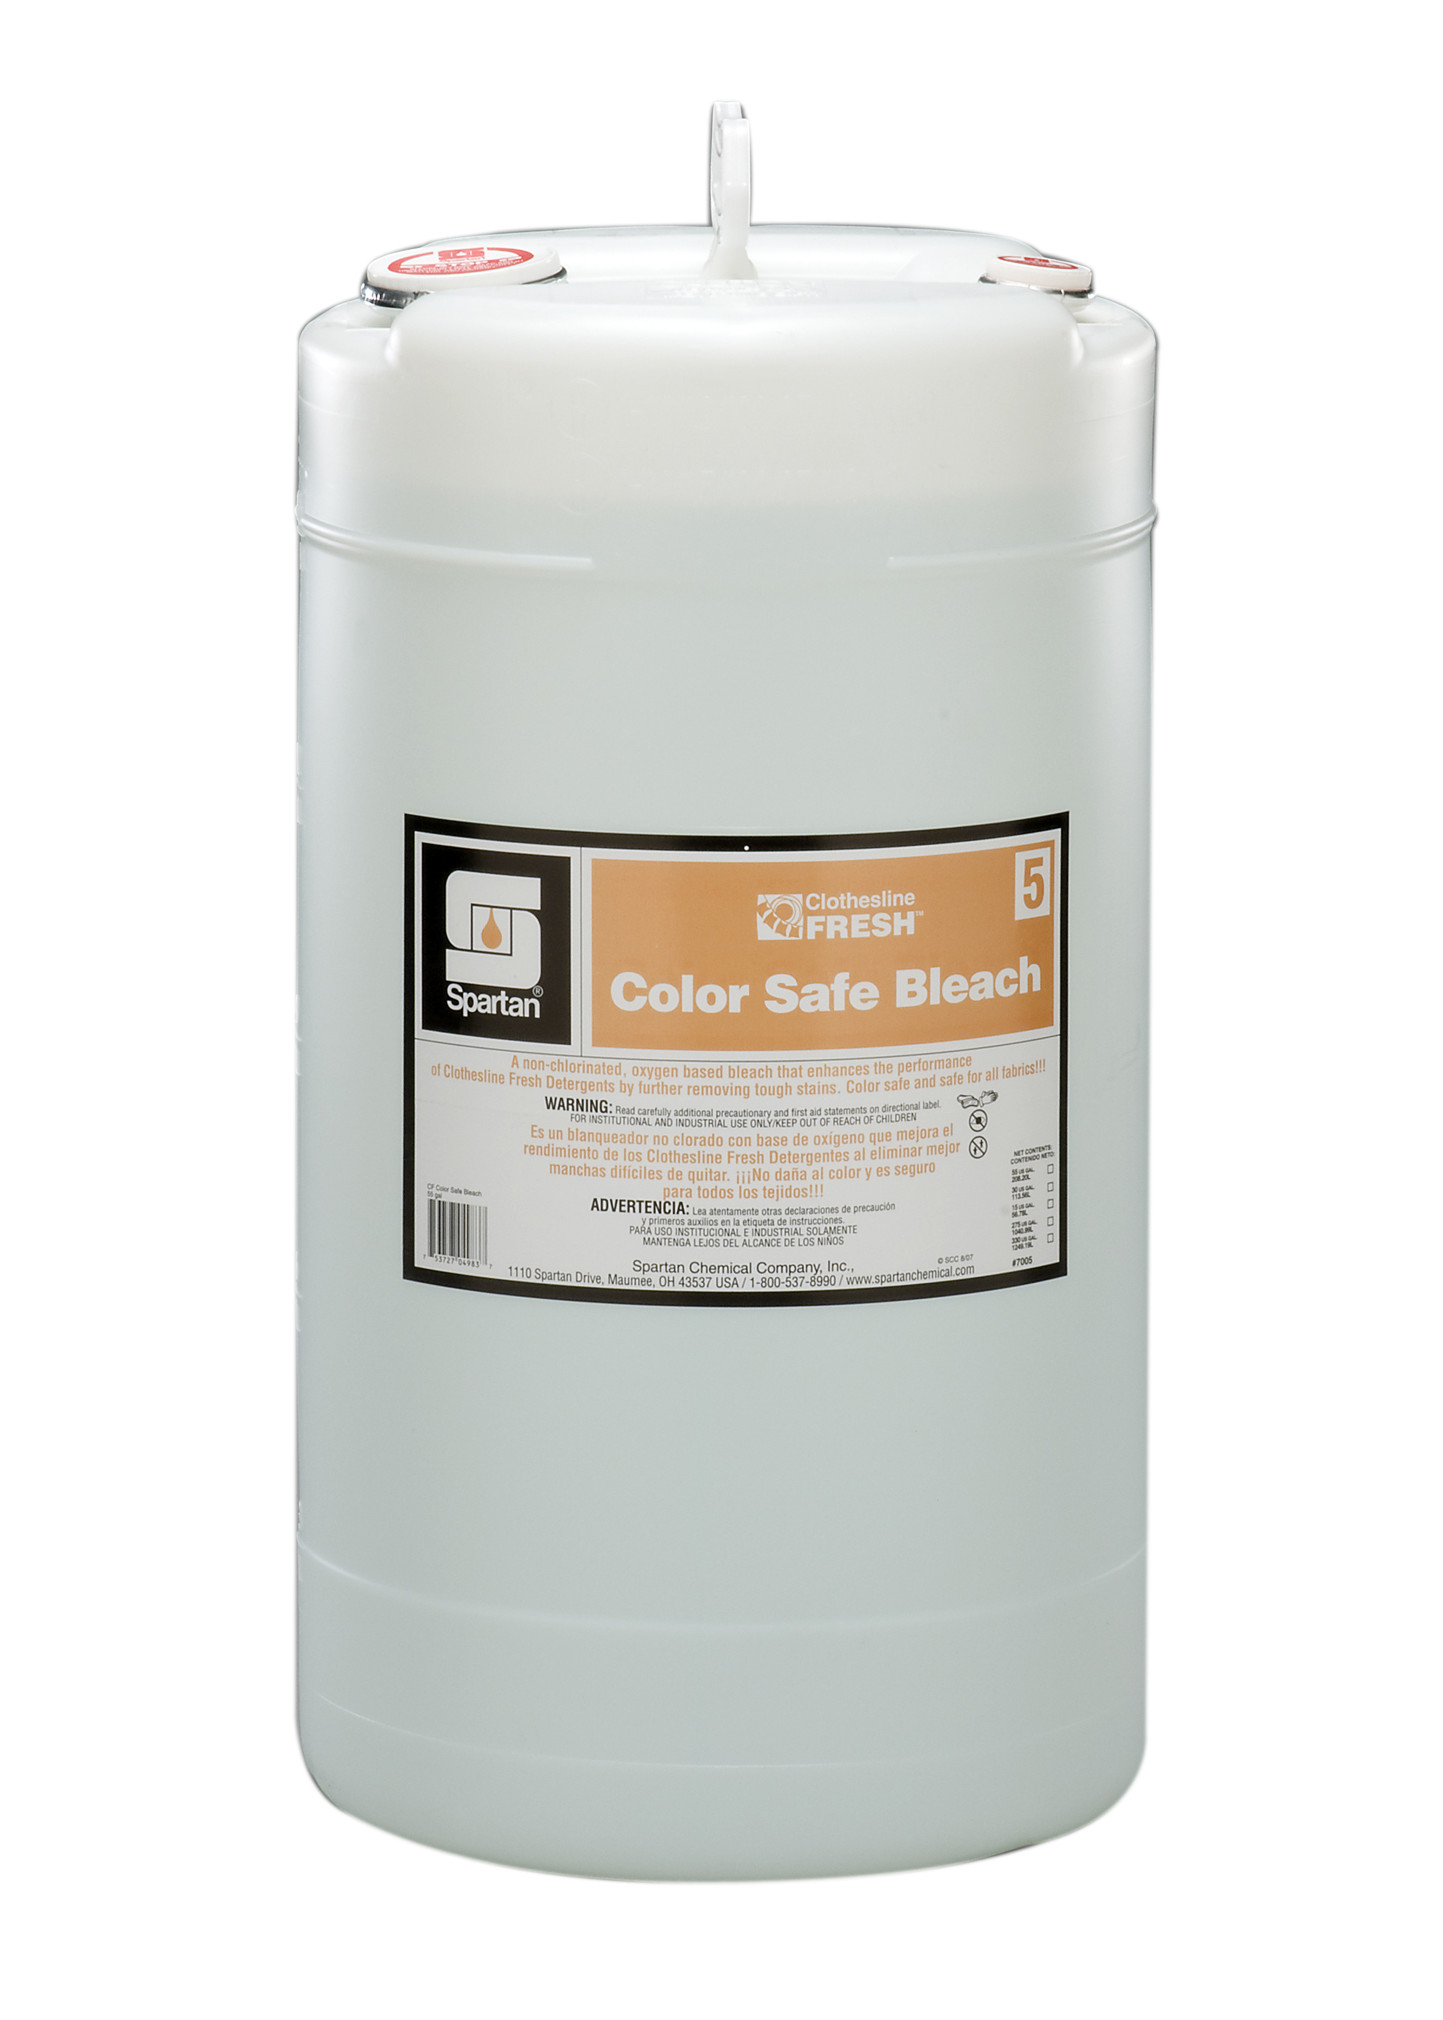 Spartan Chemical Company Clothesline Fresh Color Safe Bleach 5, 15 GAL DRUM